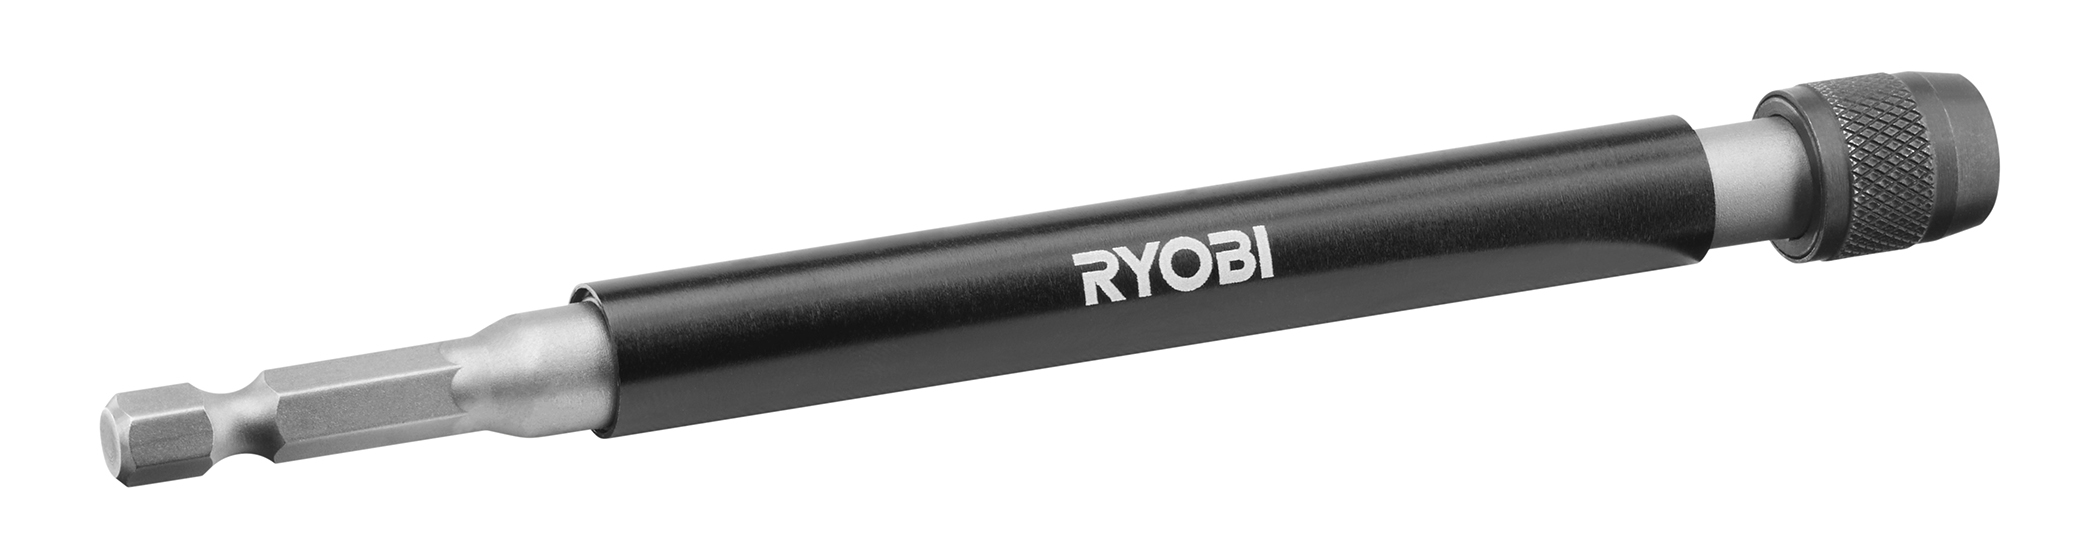 Ryobi Part # A95HBK1 - Ryobi Hard Bristle Brush Cleaning Kit (2